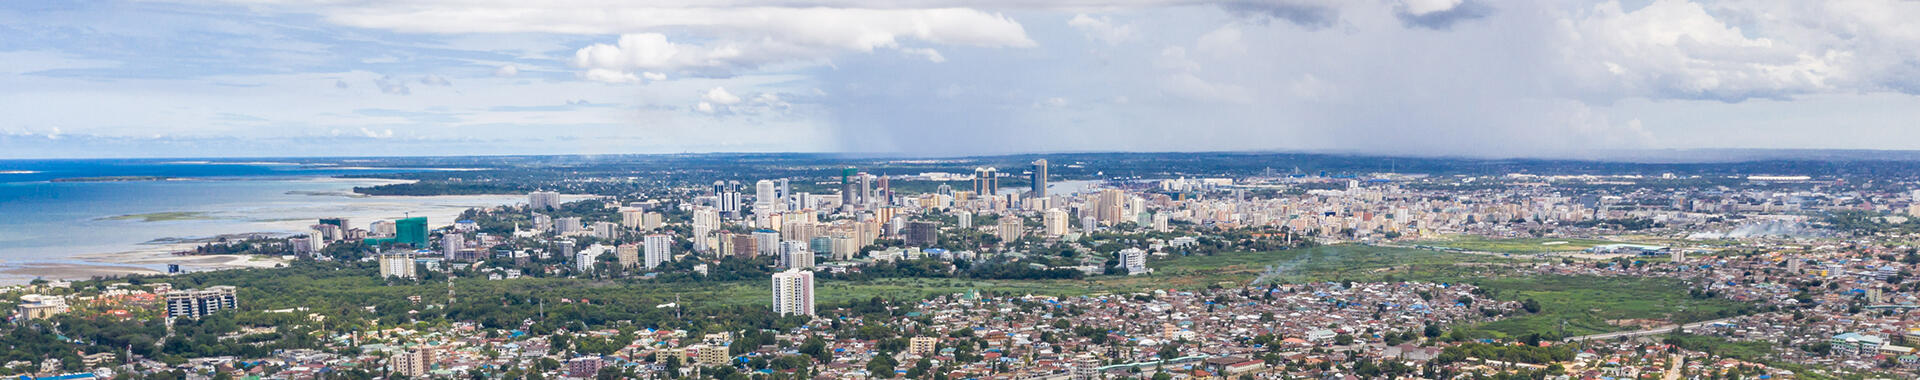 Dar es Salaam from the air. Image: Imani Nsamila / UNU-WIDER